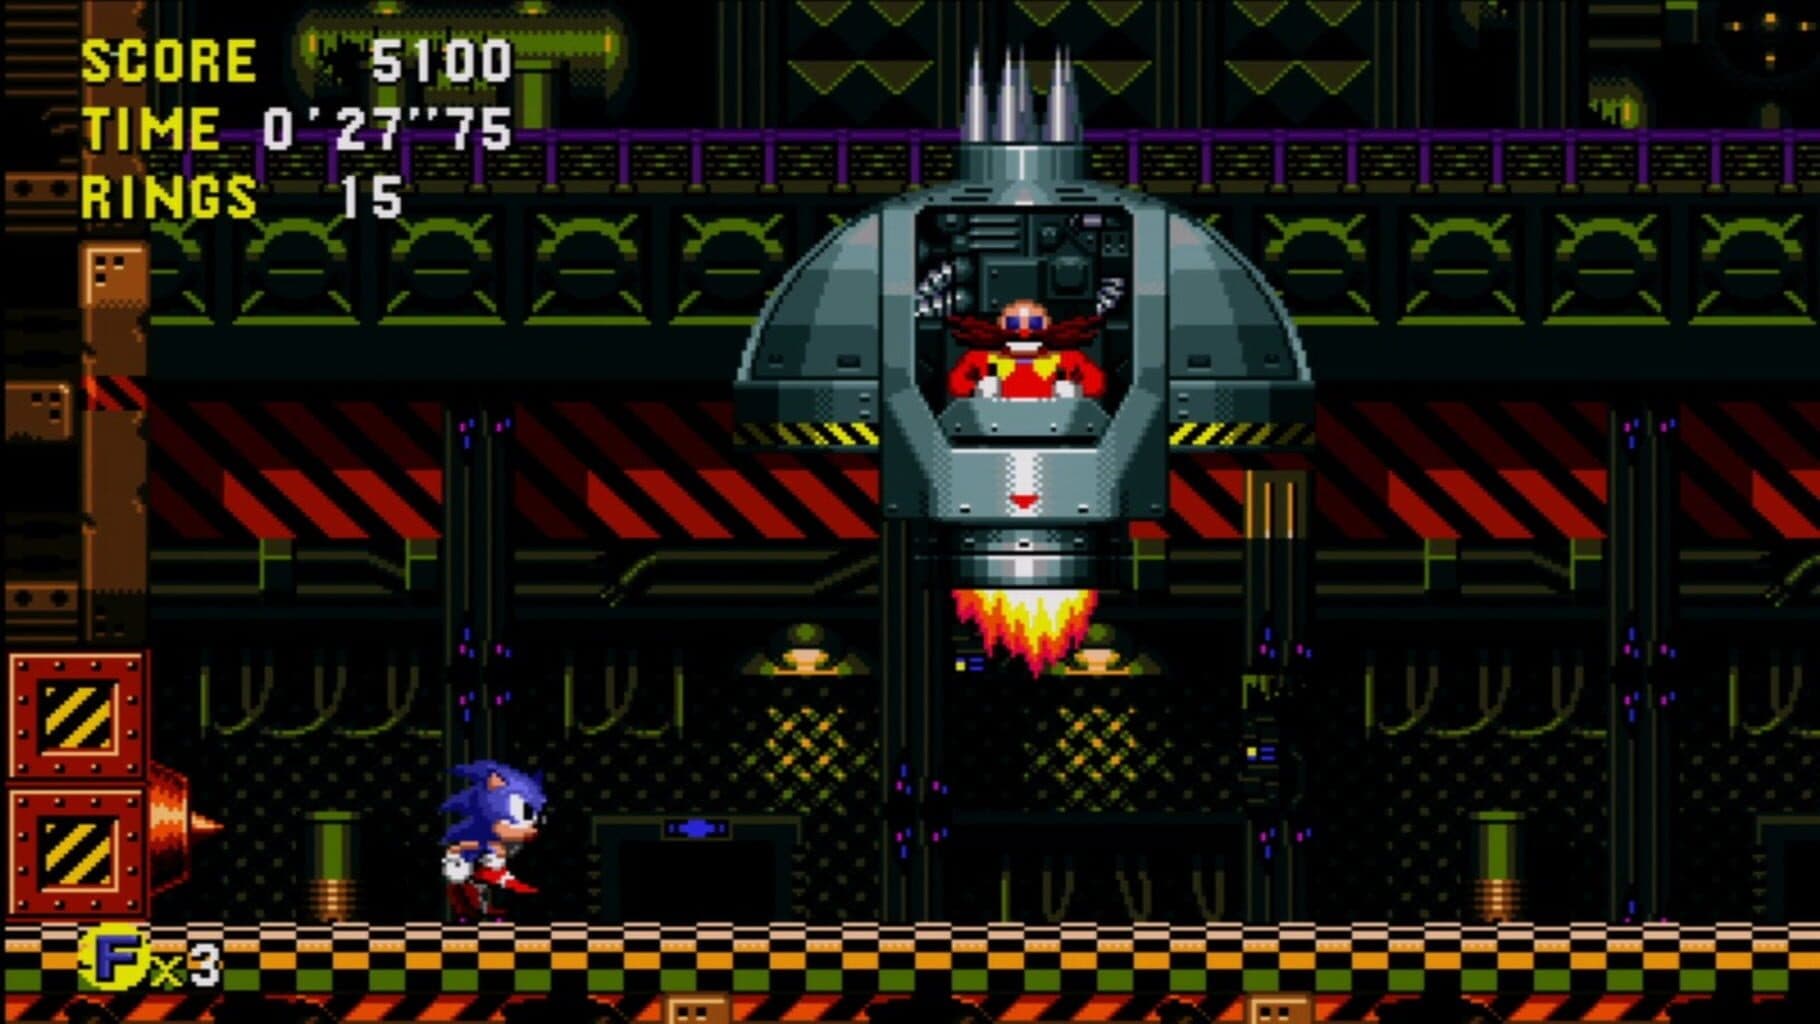 Sonic CD Image